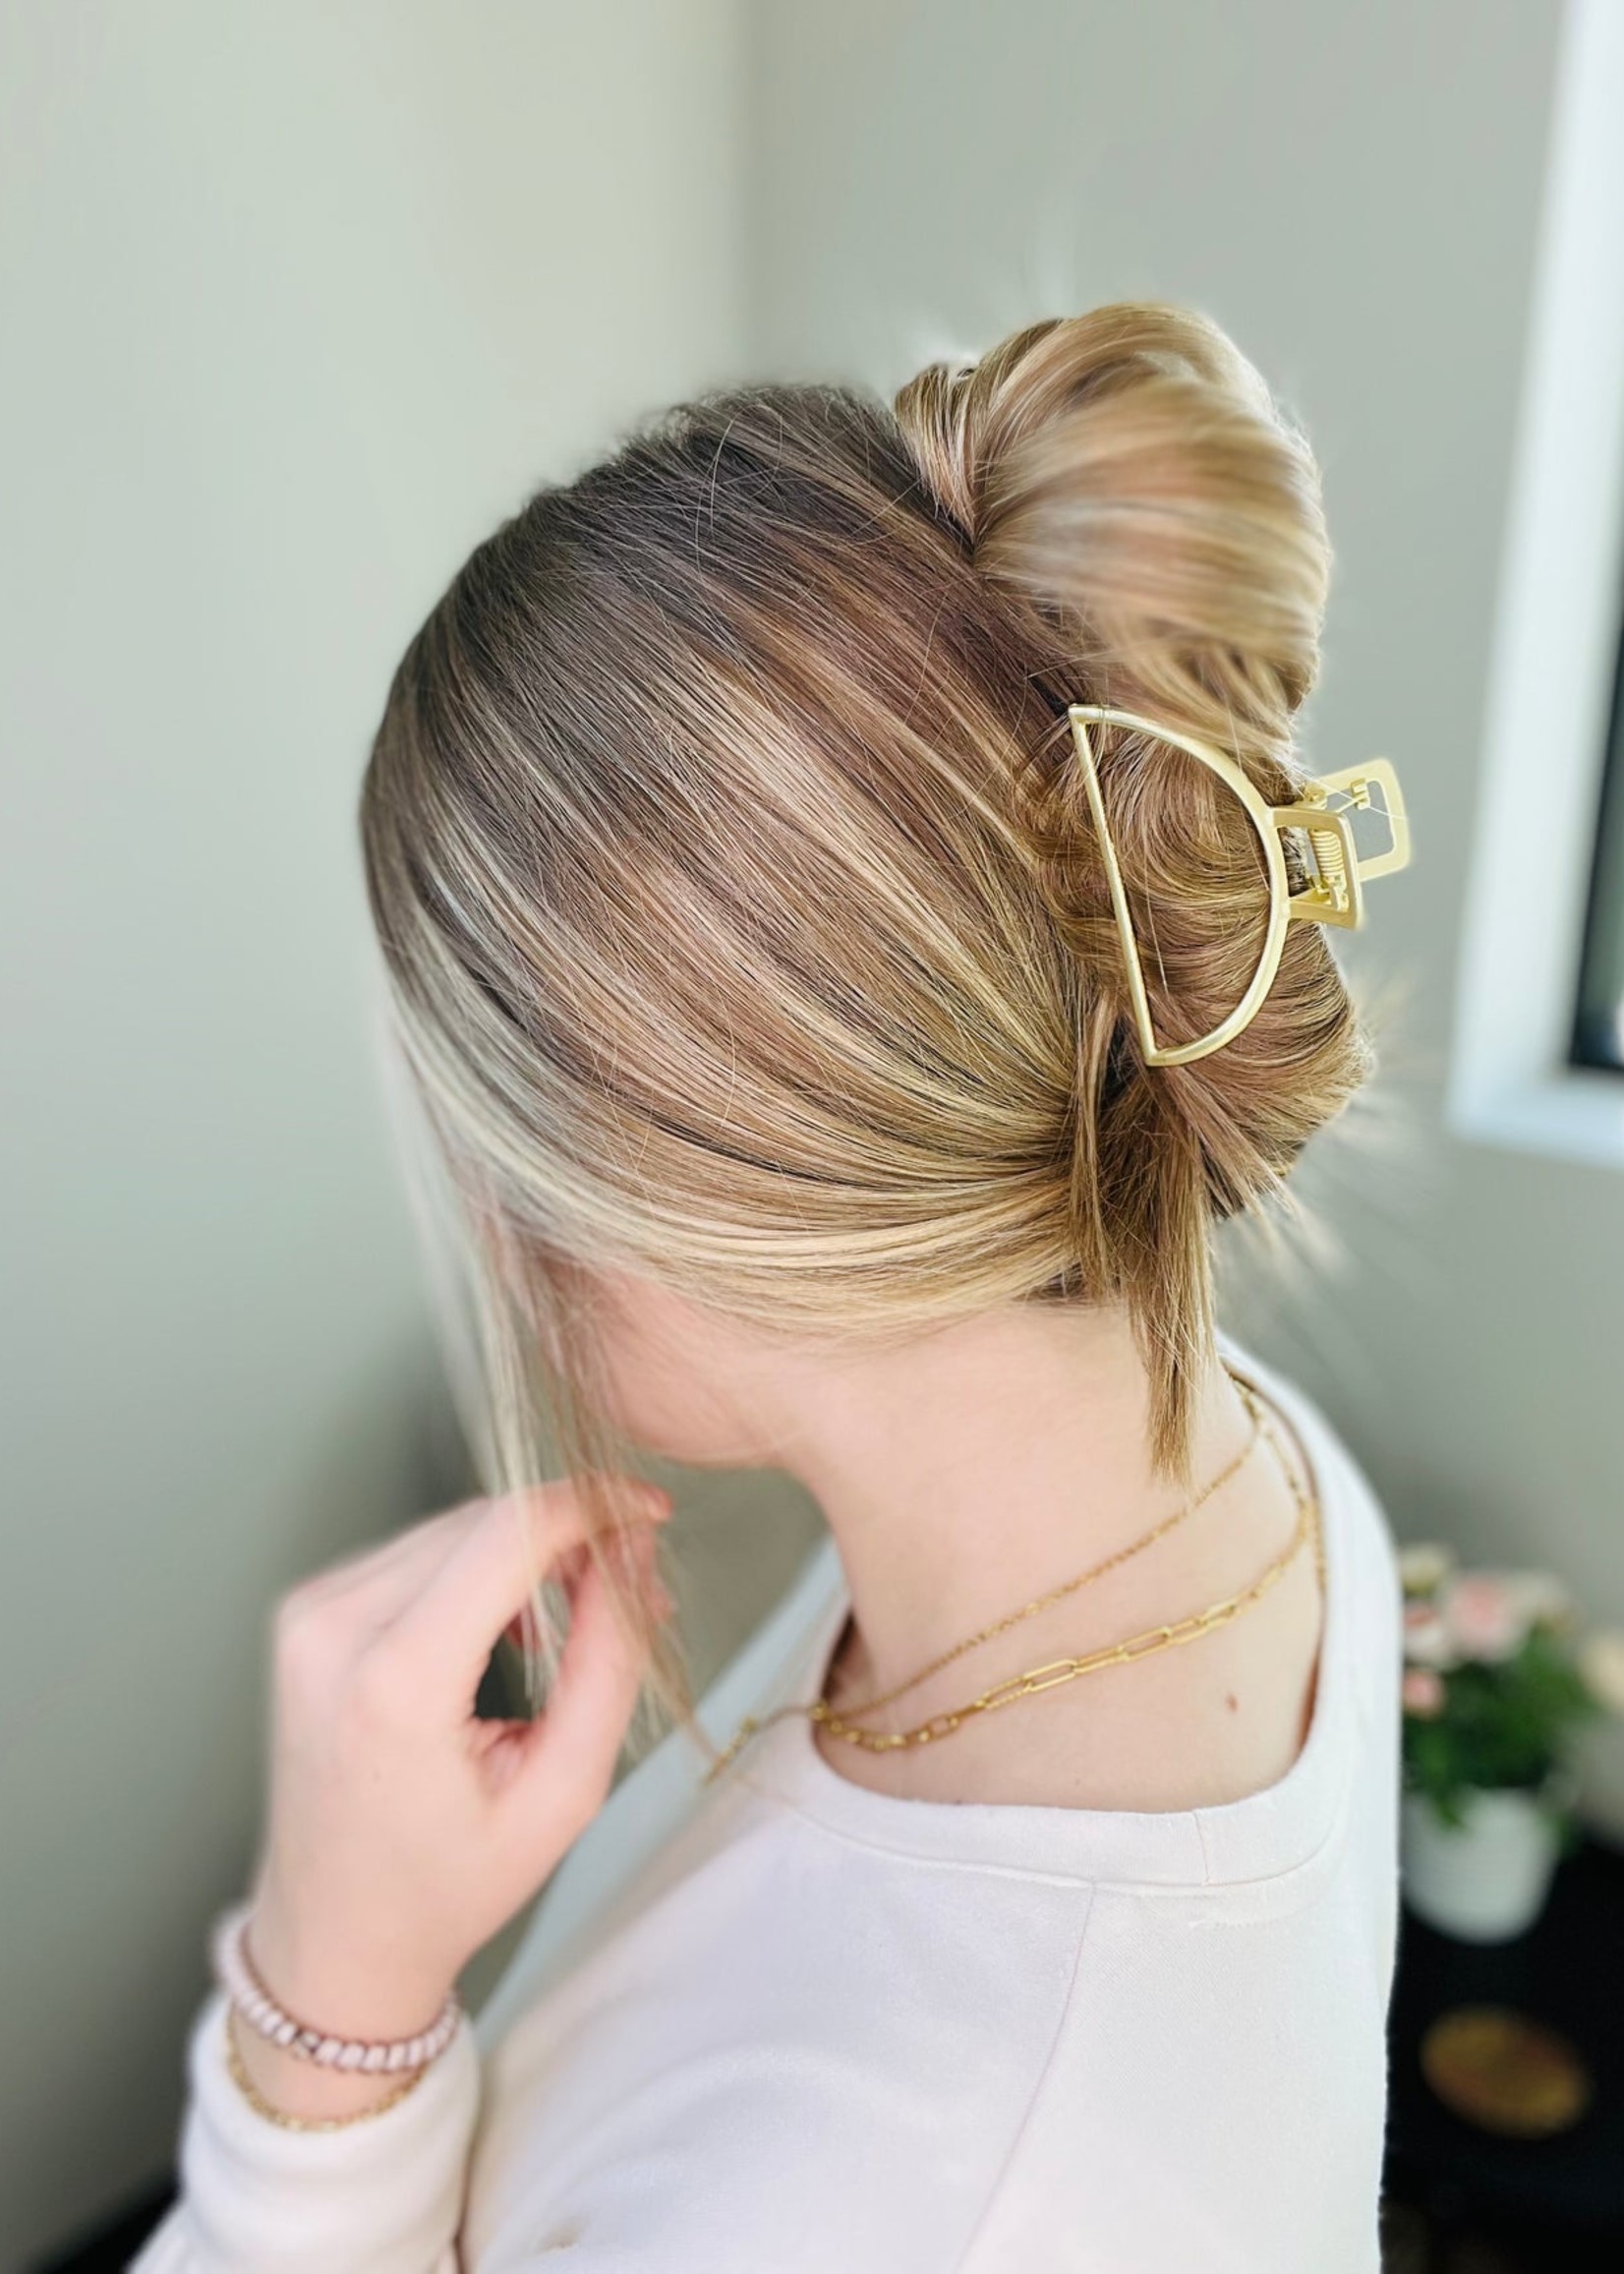 Gold hair clips